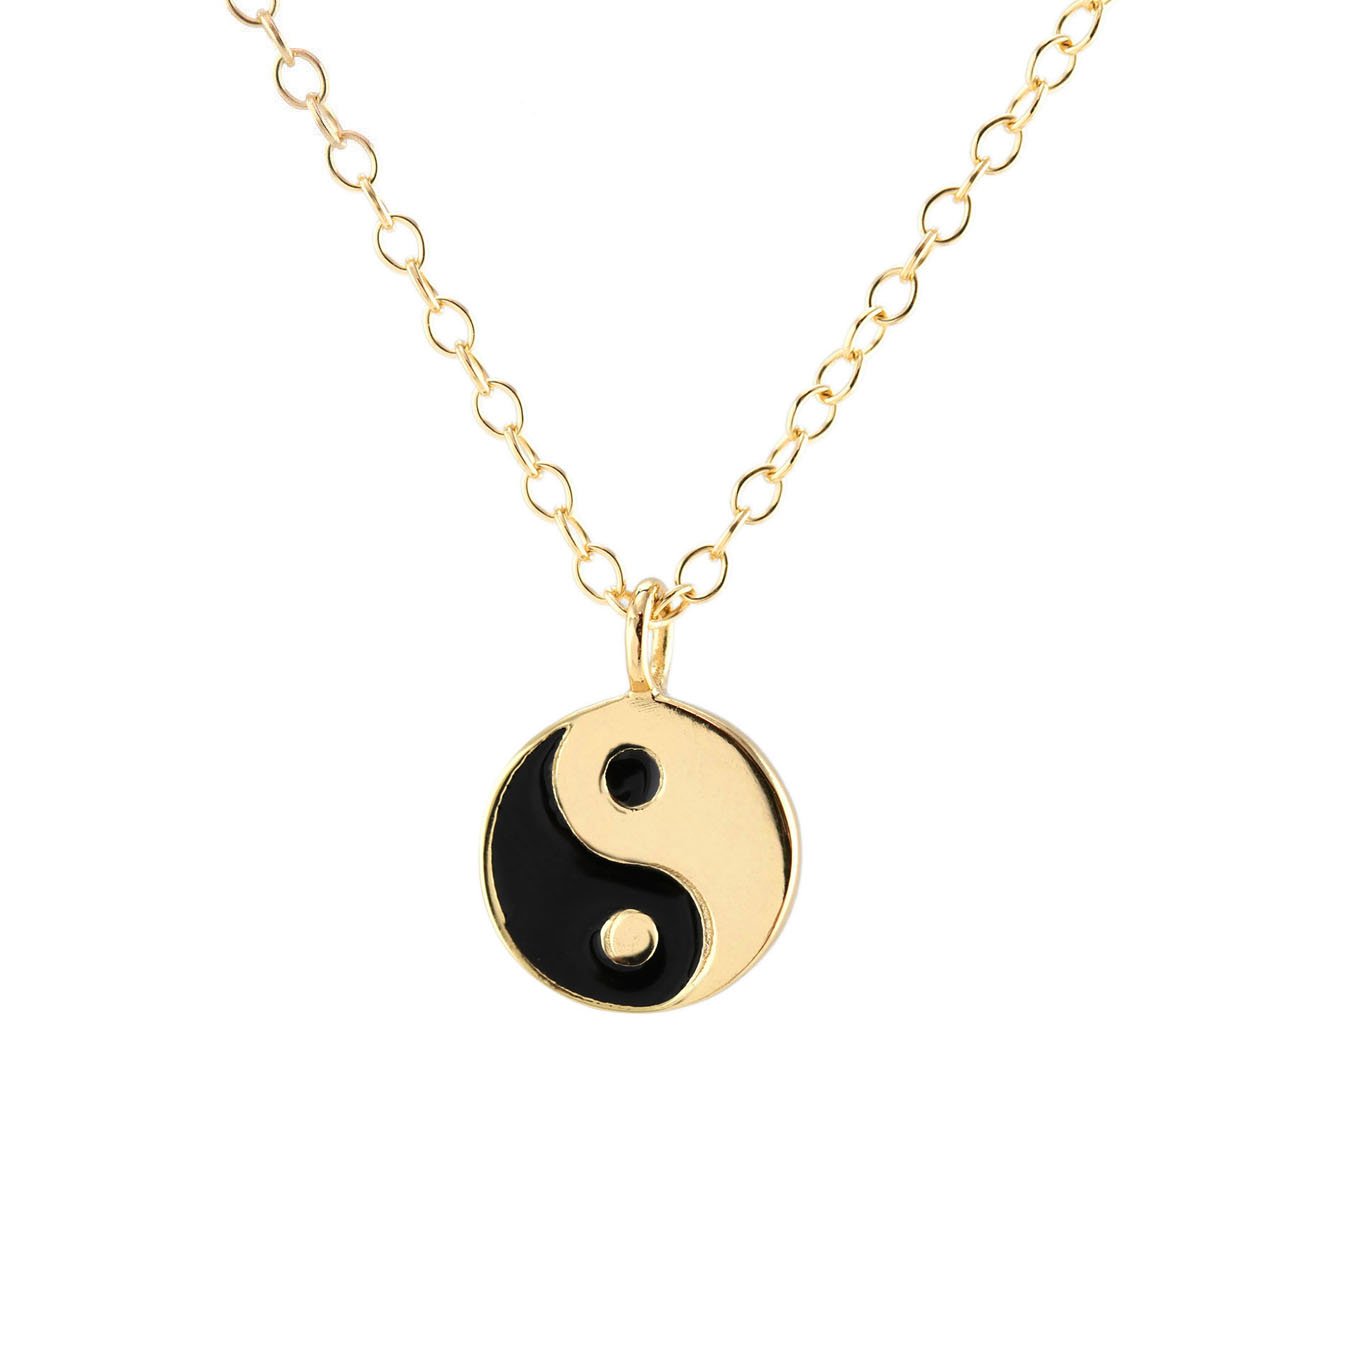 Yin & Yang Enamel Charm Necklace